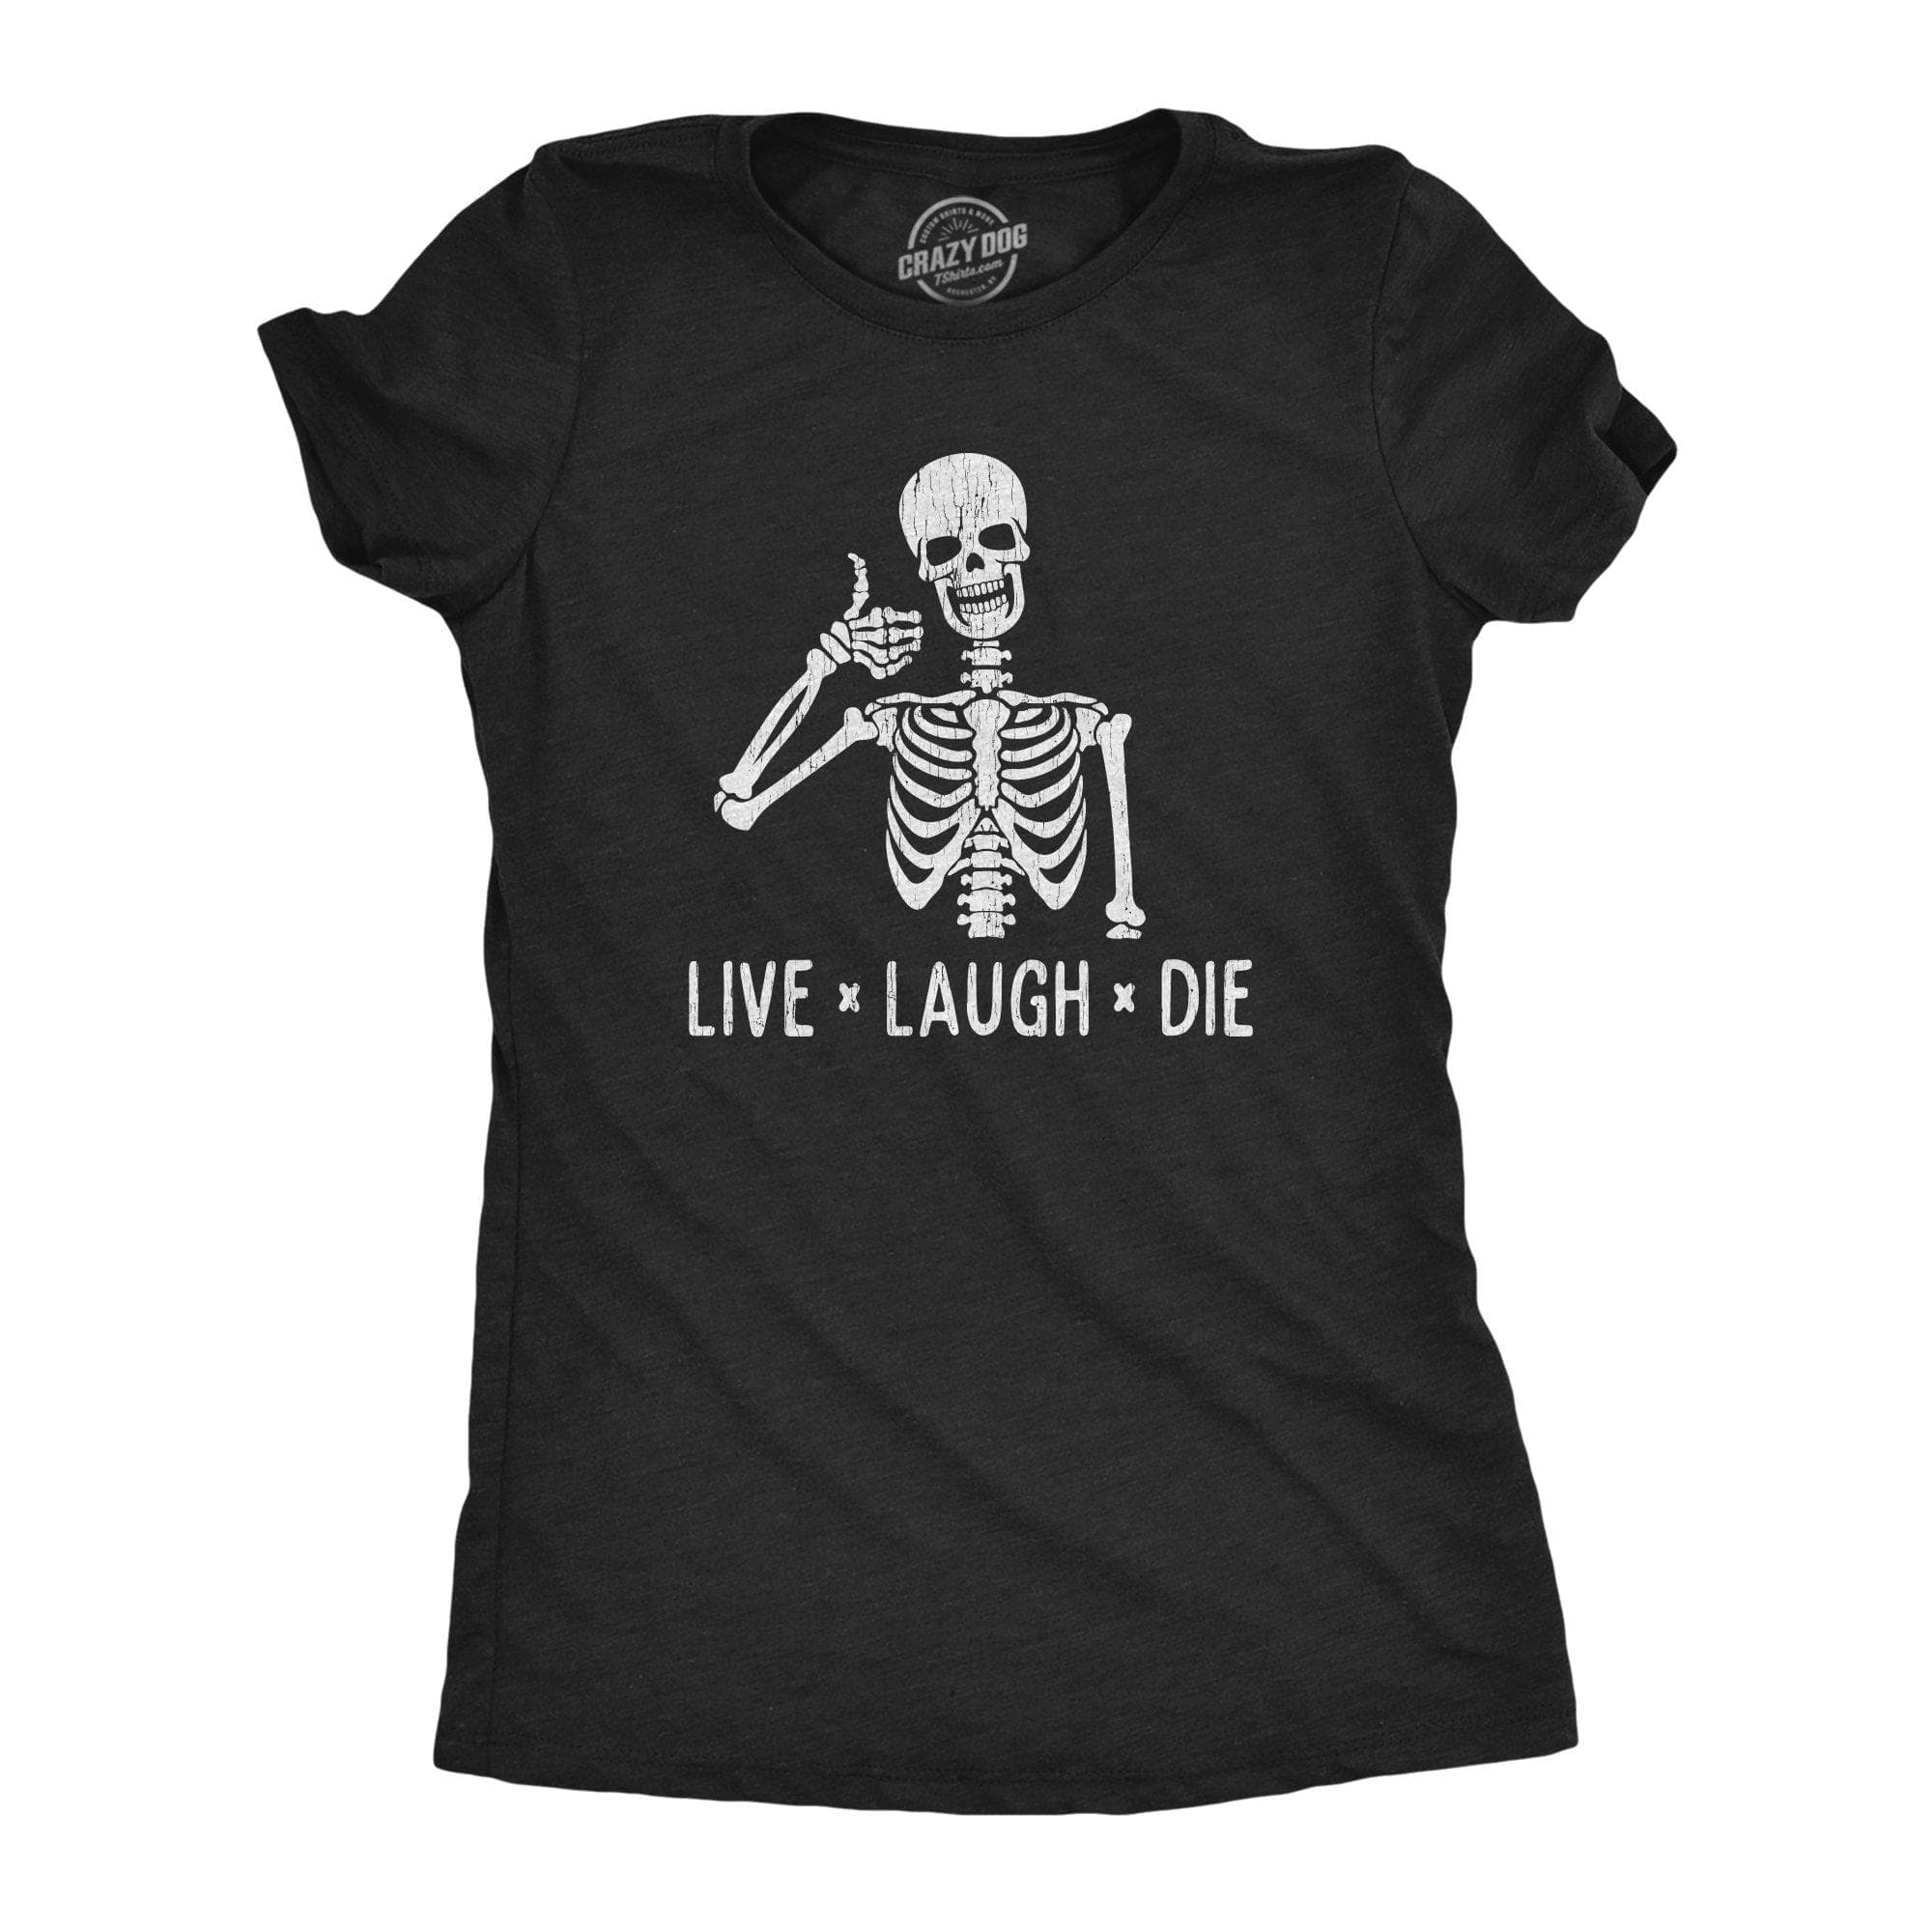 Live Laugh Die Women's Tshirt - Crazy Dog T-Shirts